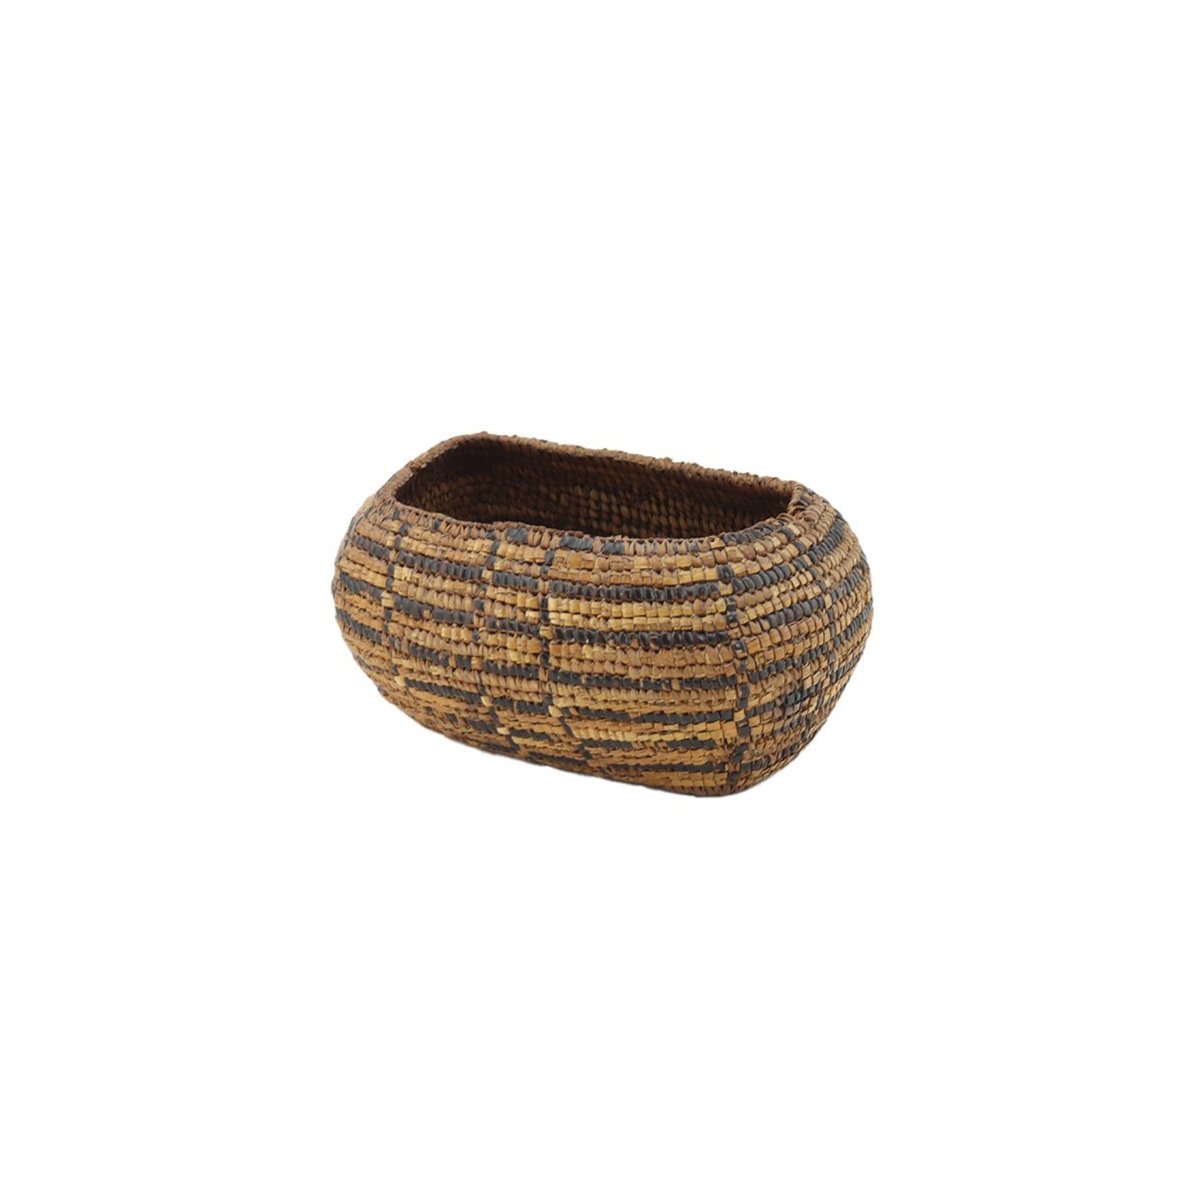 Fully Imbricated Lillooett Basket, Circa 1880